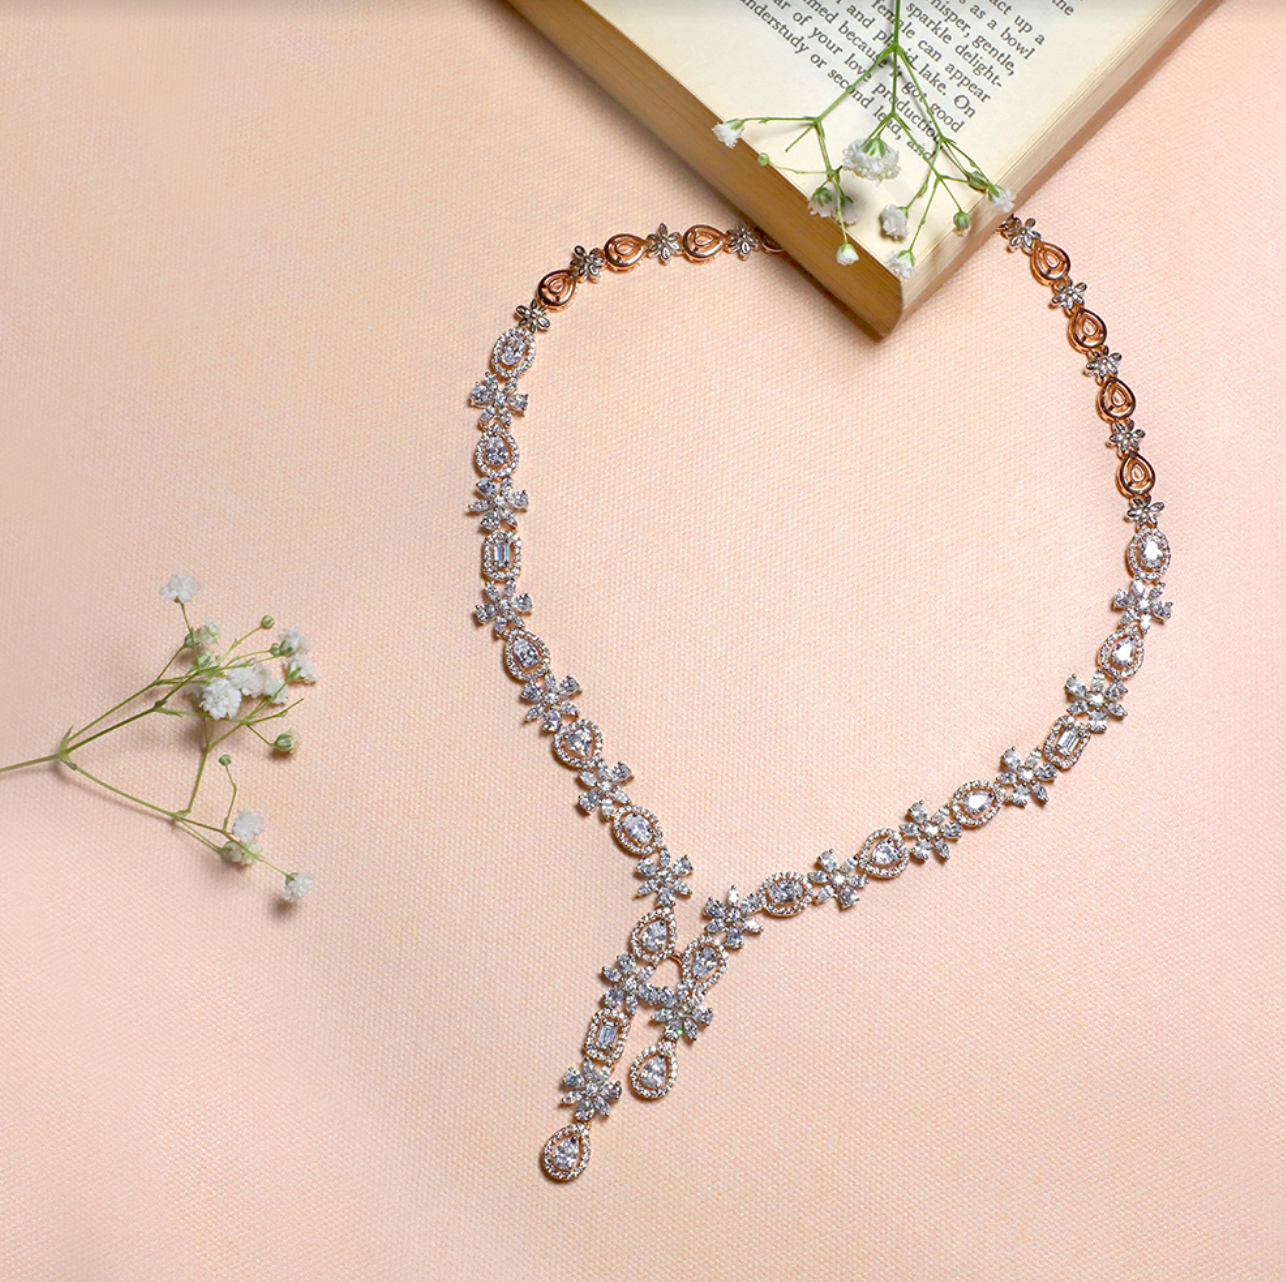 925 silver swarovski necklace with earrings - Amrrutam